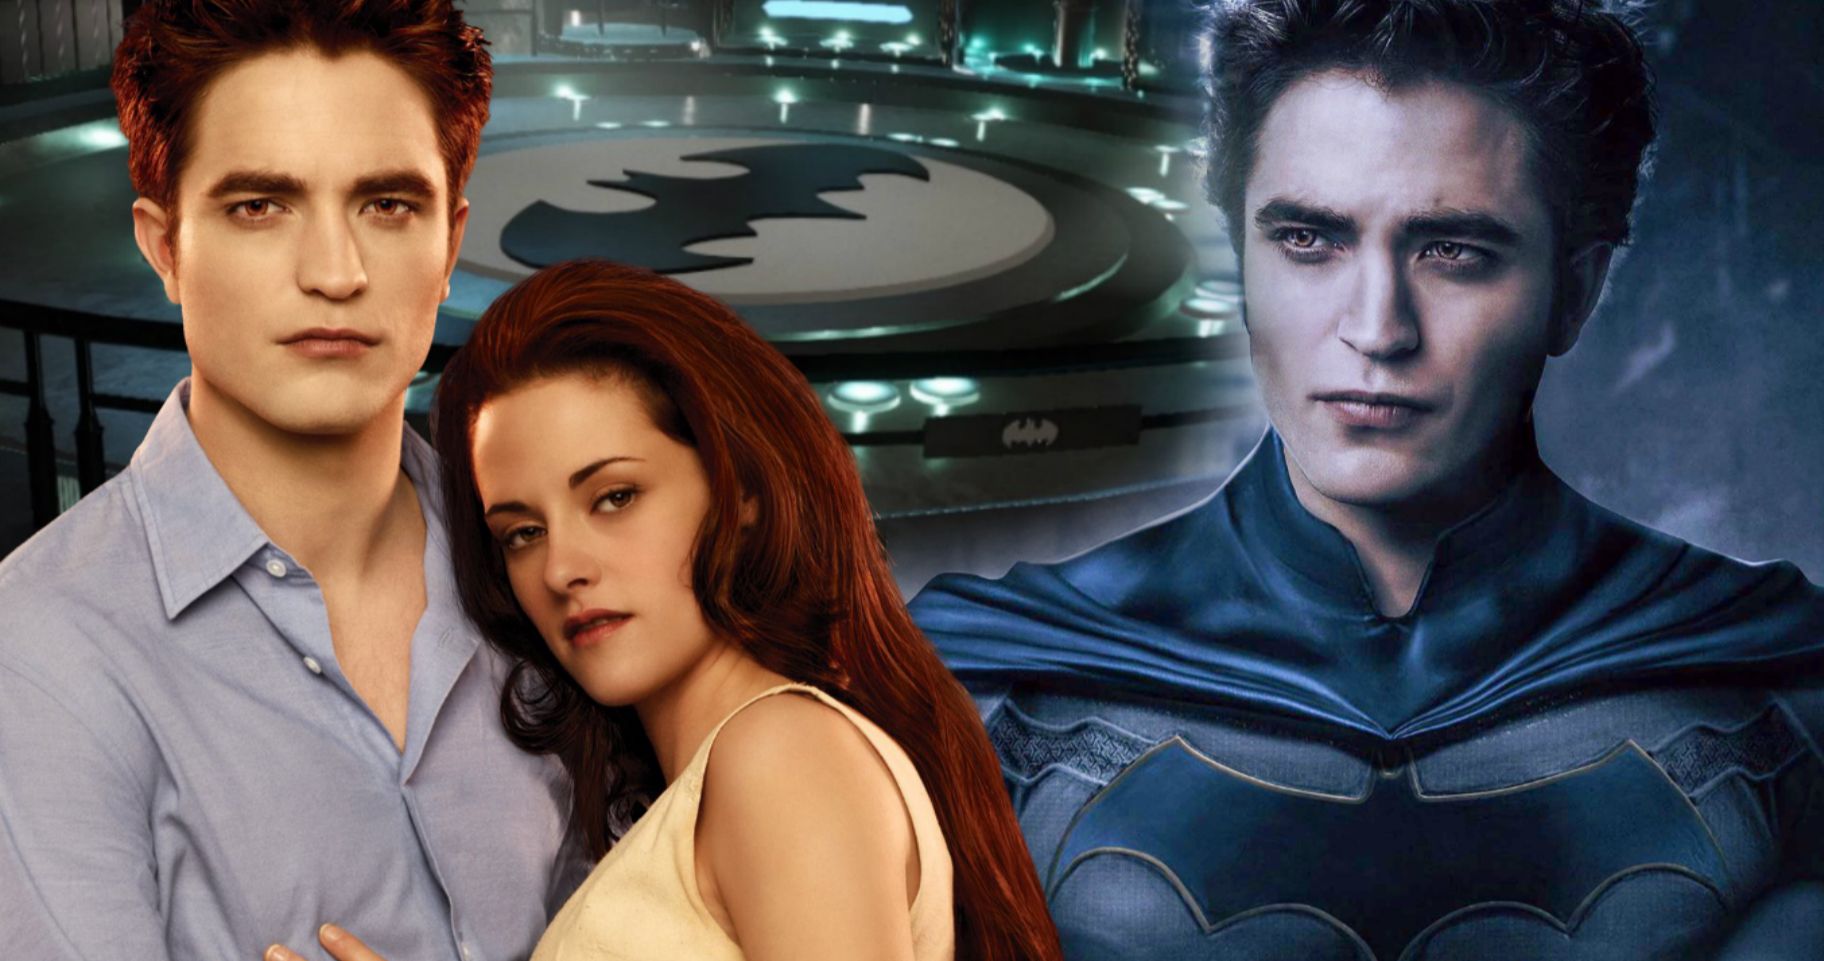 Robert Pattinson's The Batman Casting Is Brilliant Says Twilight Finale Director